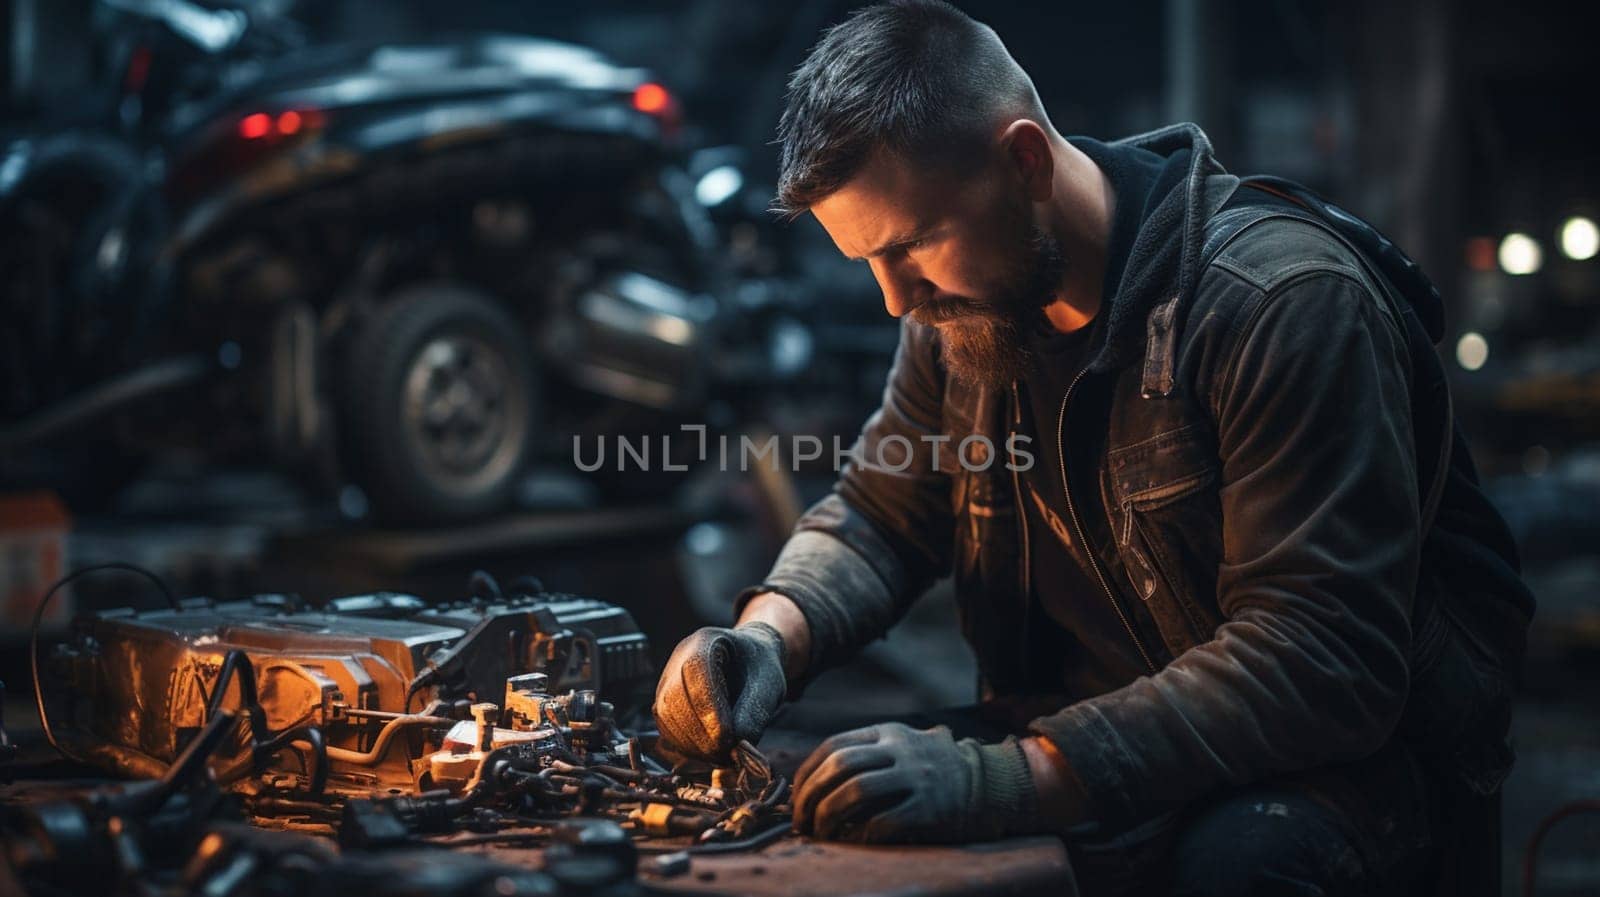 repairman mechanic at car repairing work using a tool. High quality photo